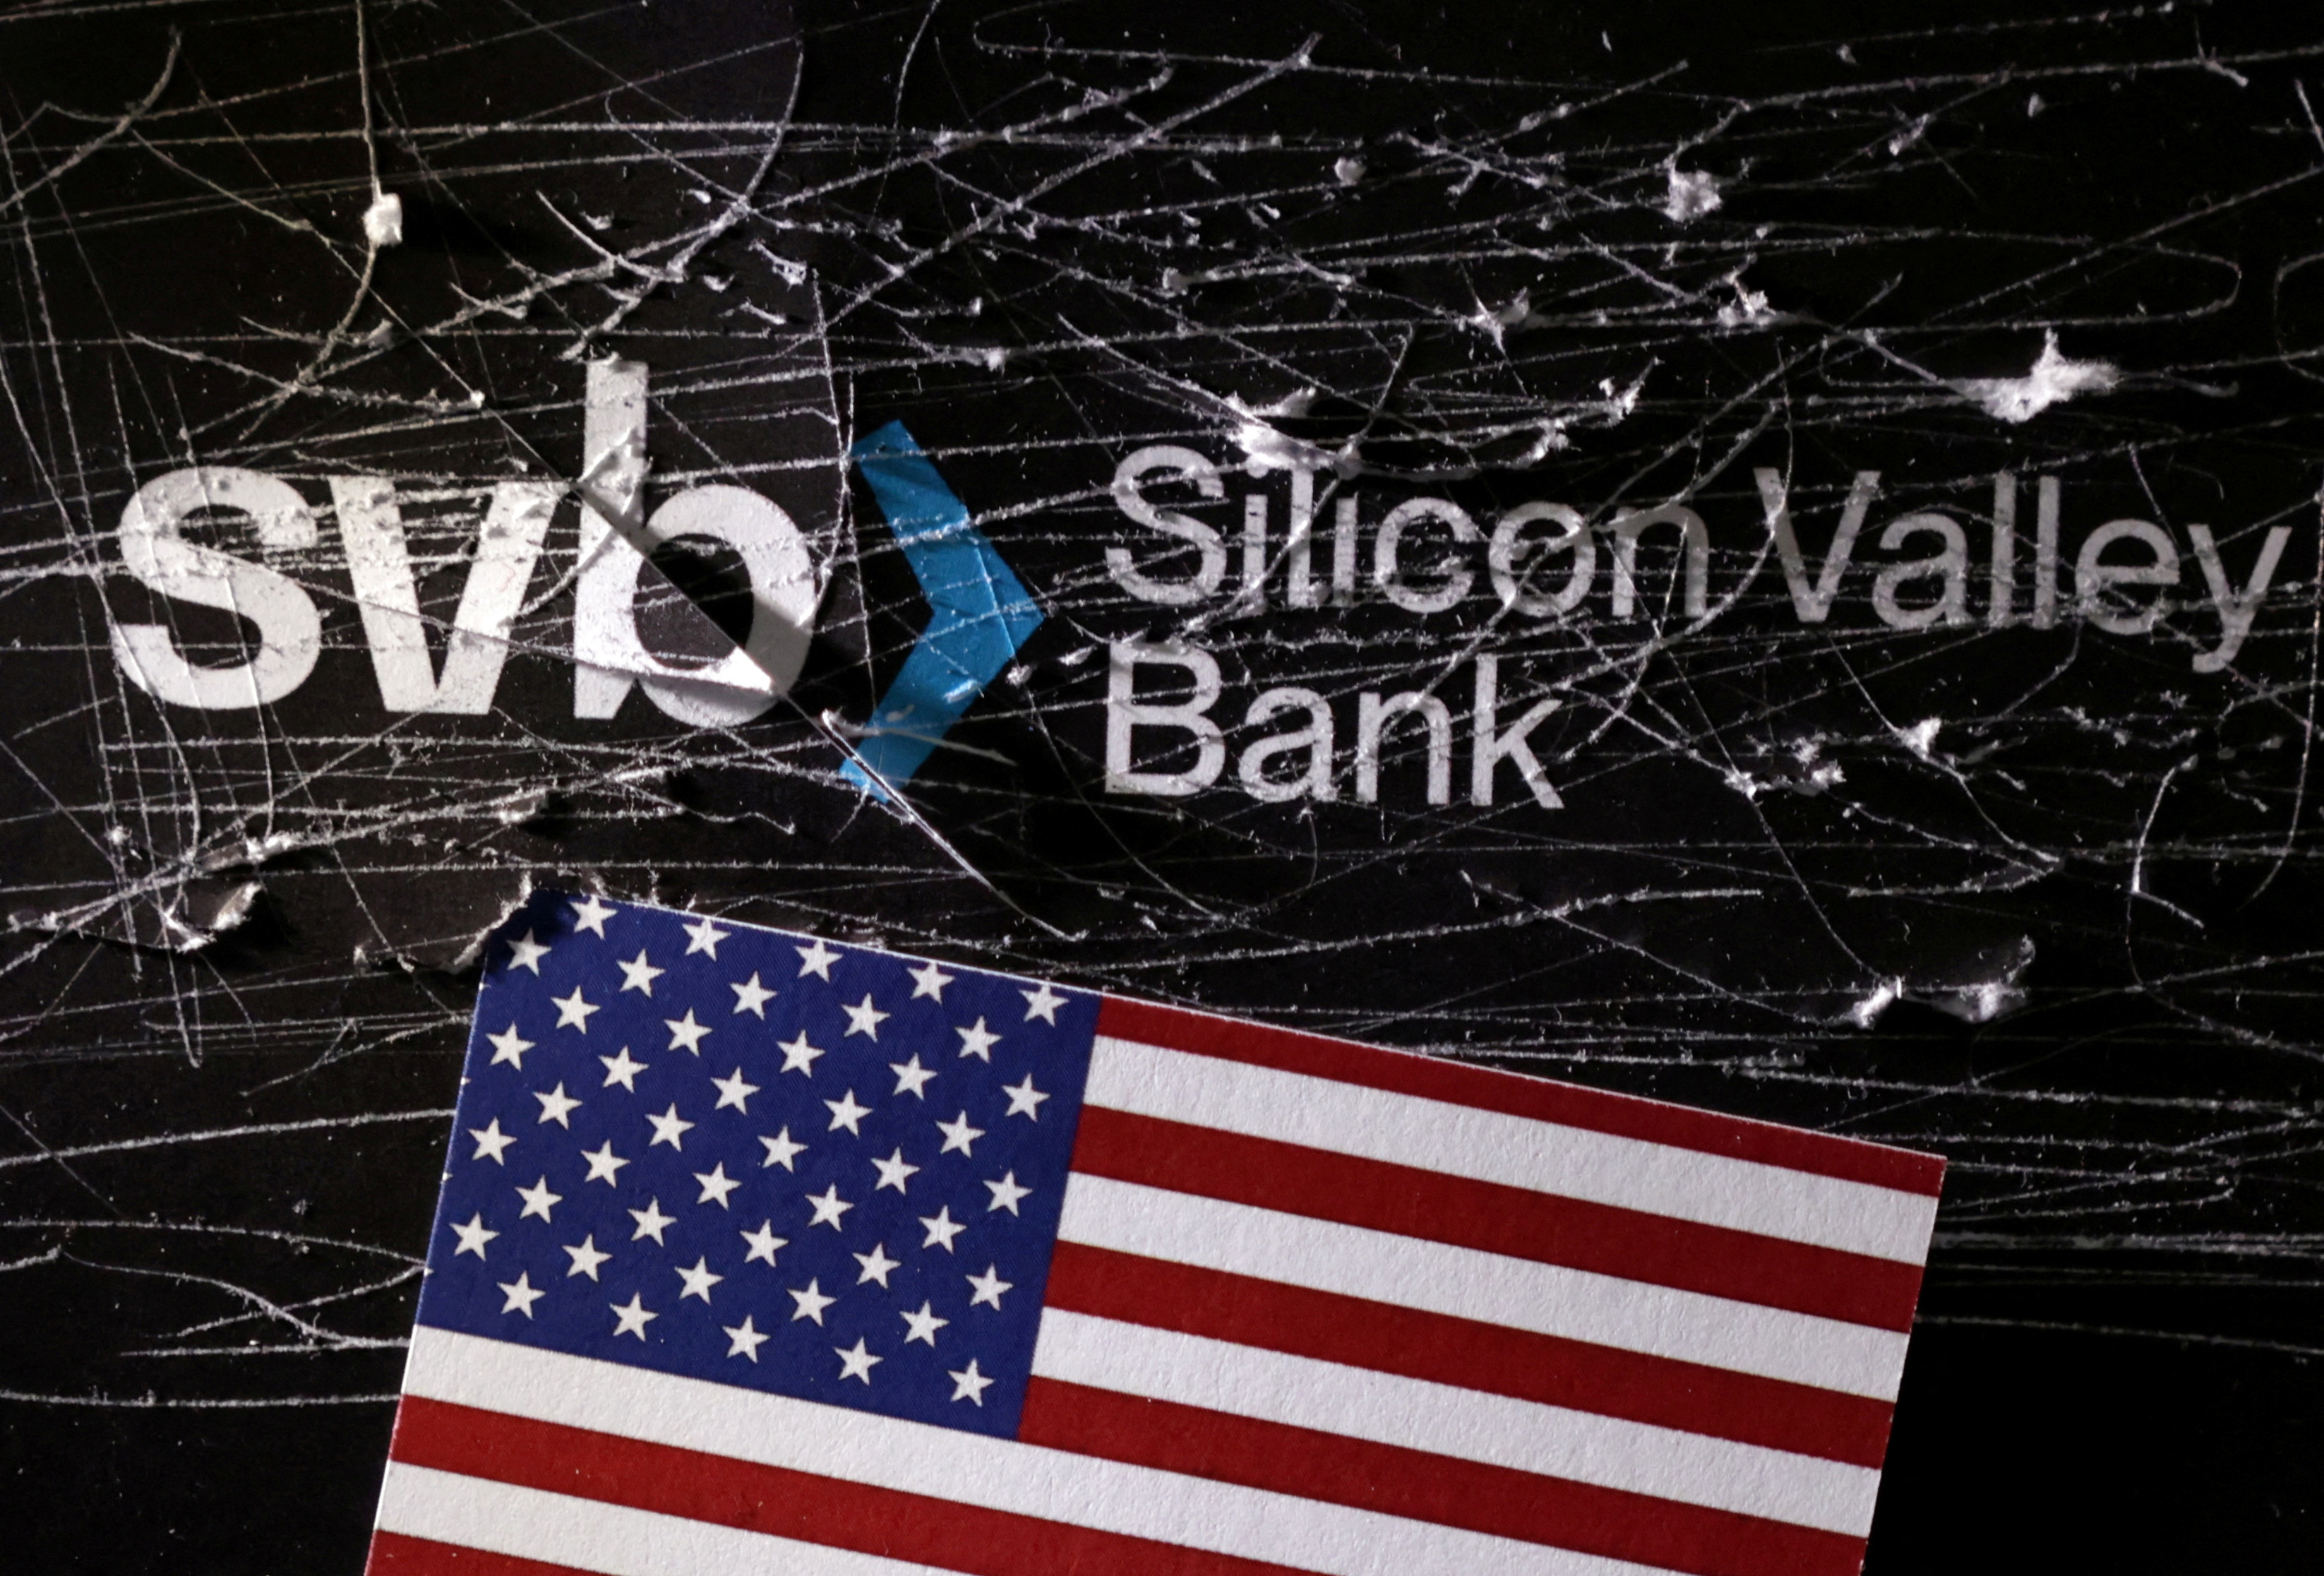 Illustration shows destroyed SVB (Silicon Valley Bank) logo and U.S. flag